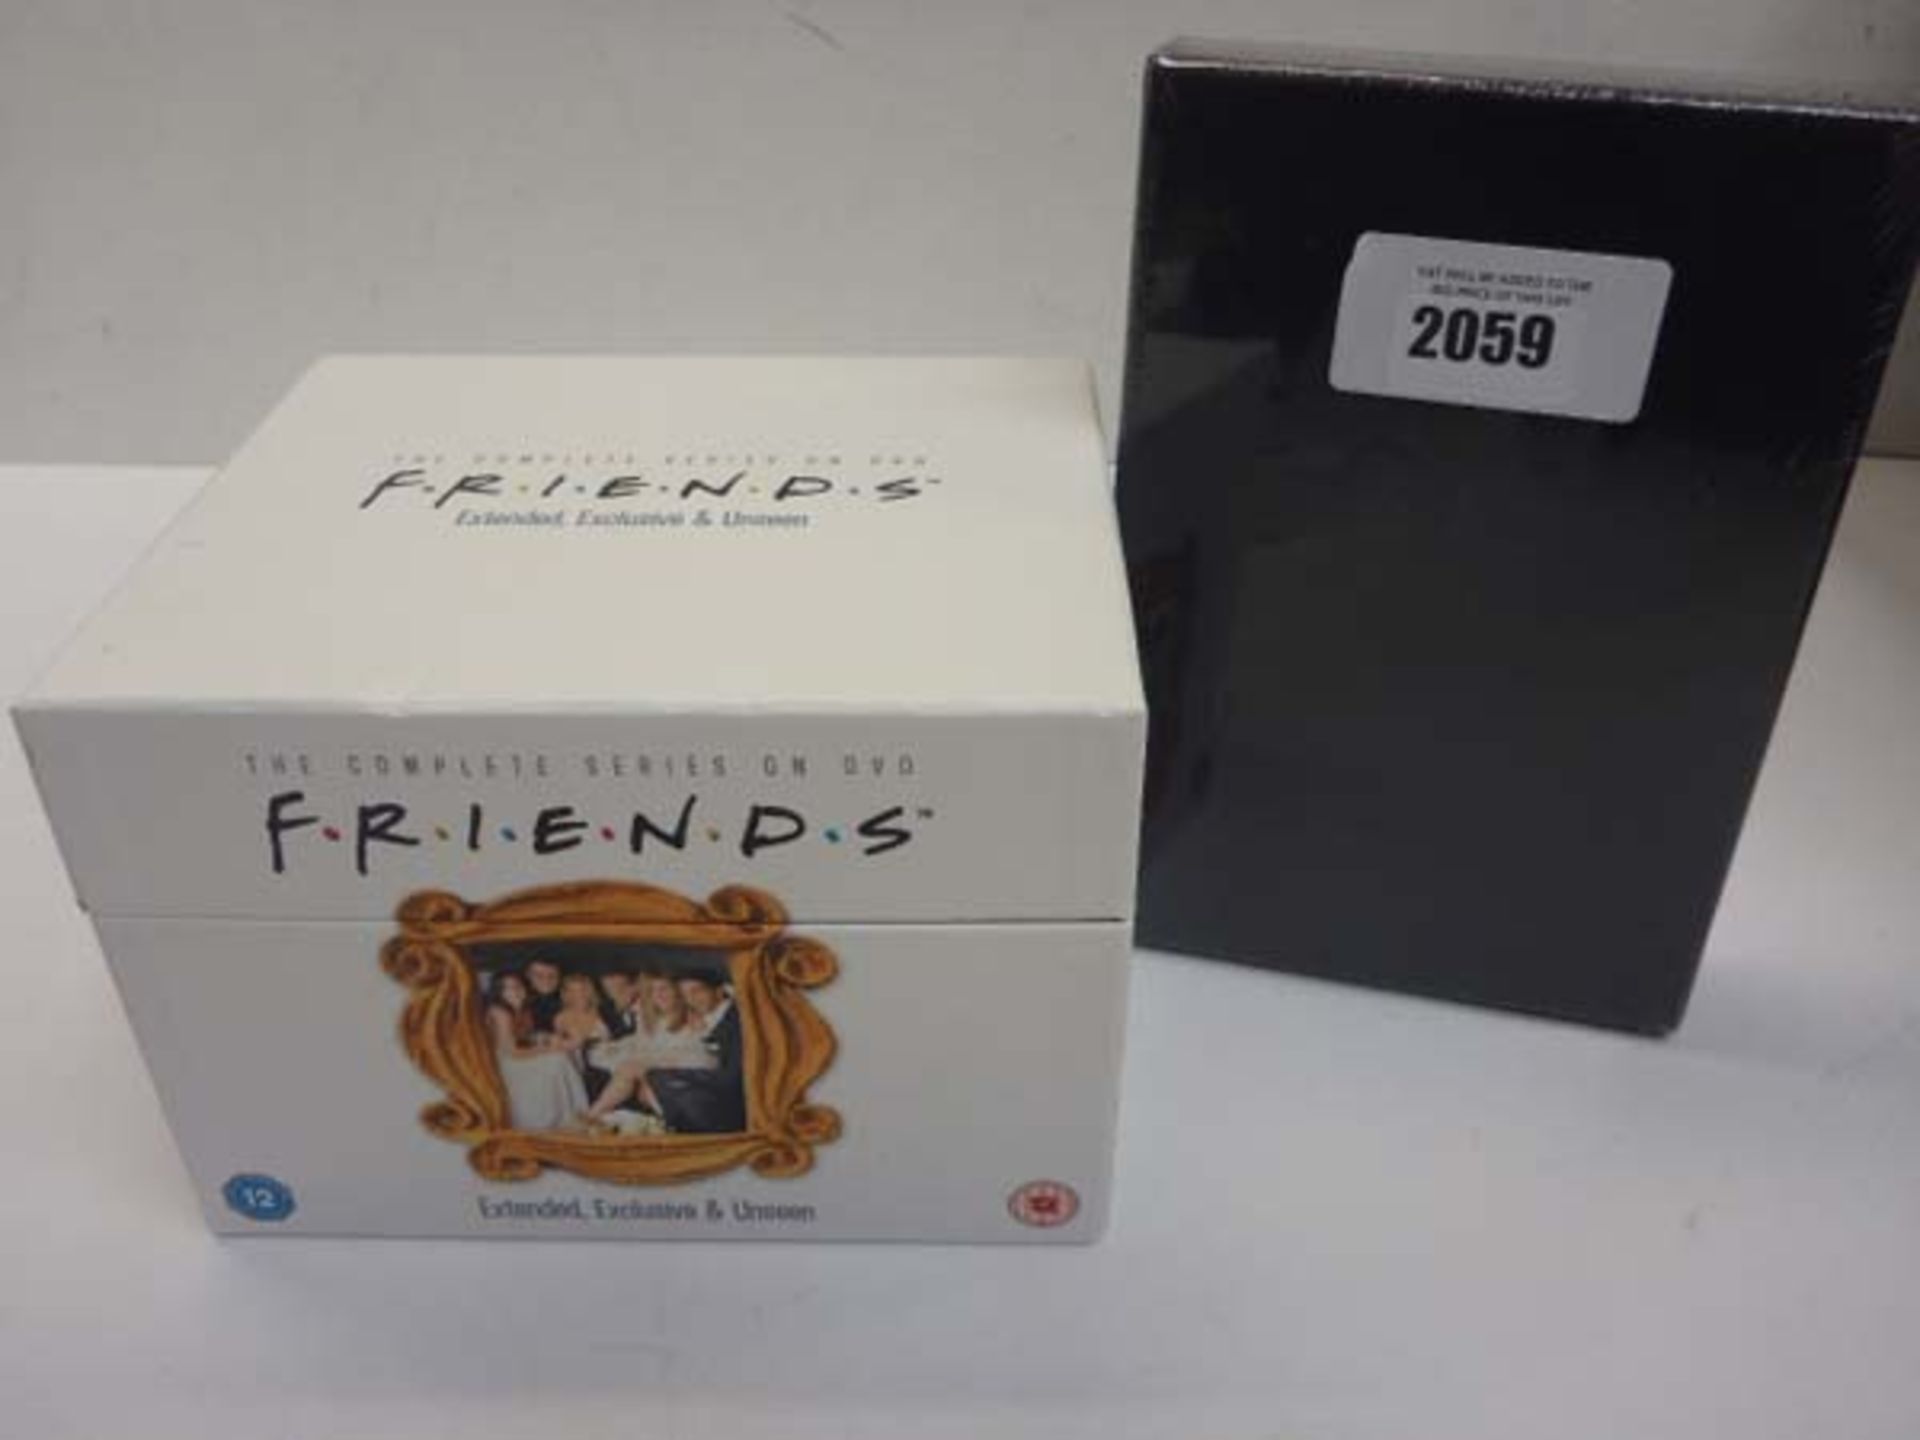 Friends Complete Series DVD boxset and BTS World original soundtrack